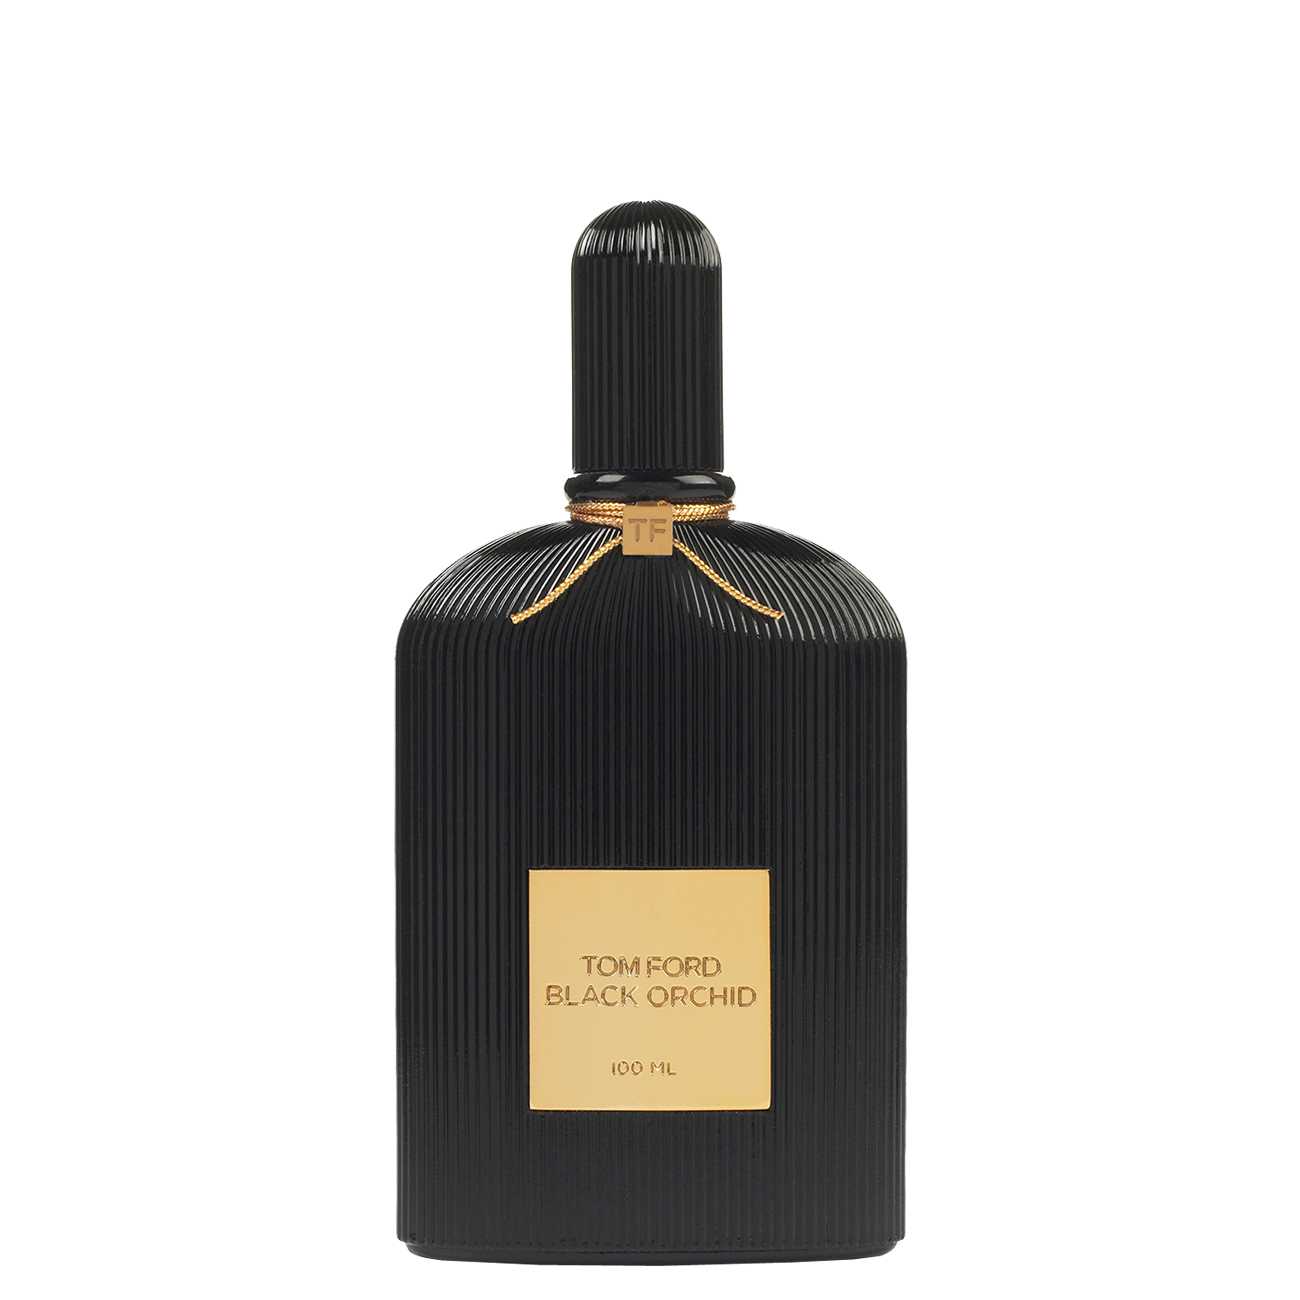 Apa de Parfum Tom Ford BLACK ORCHID 100ml cu comanda online